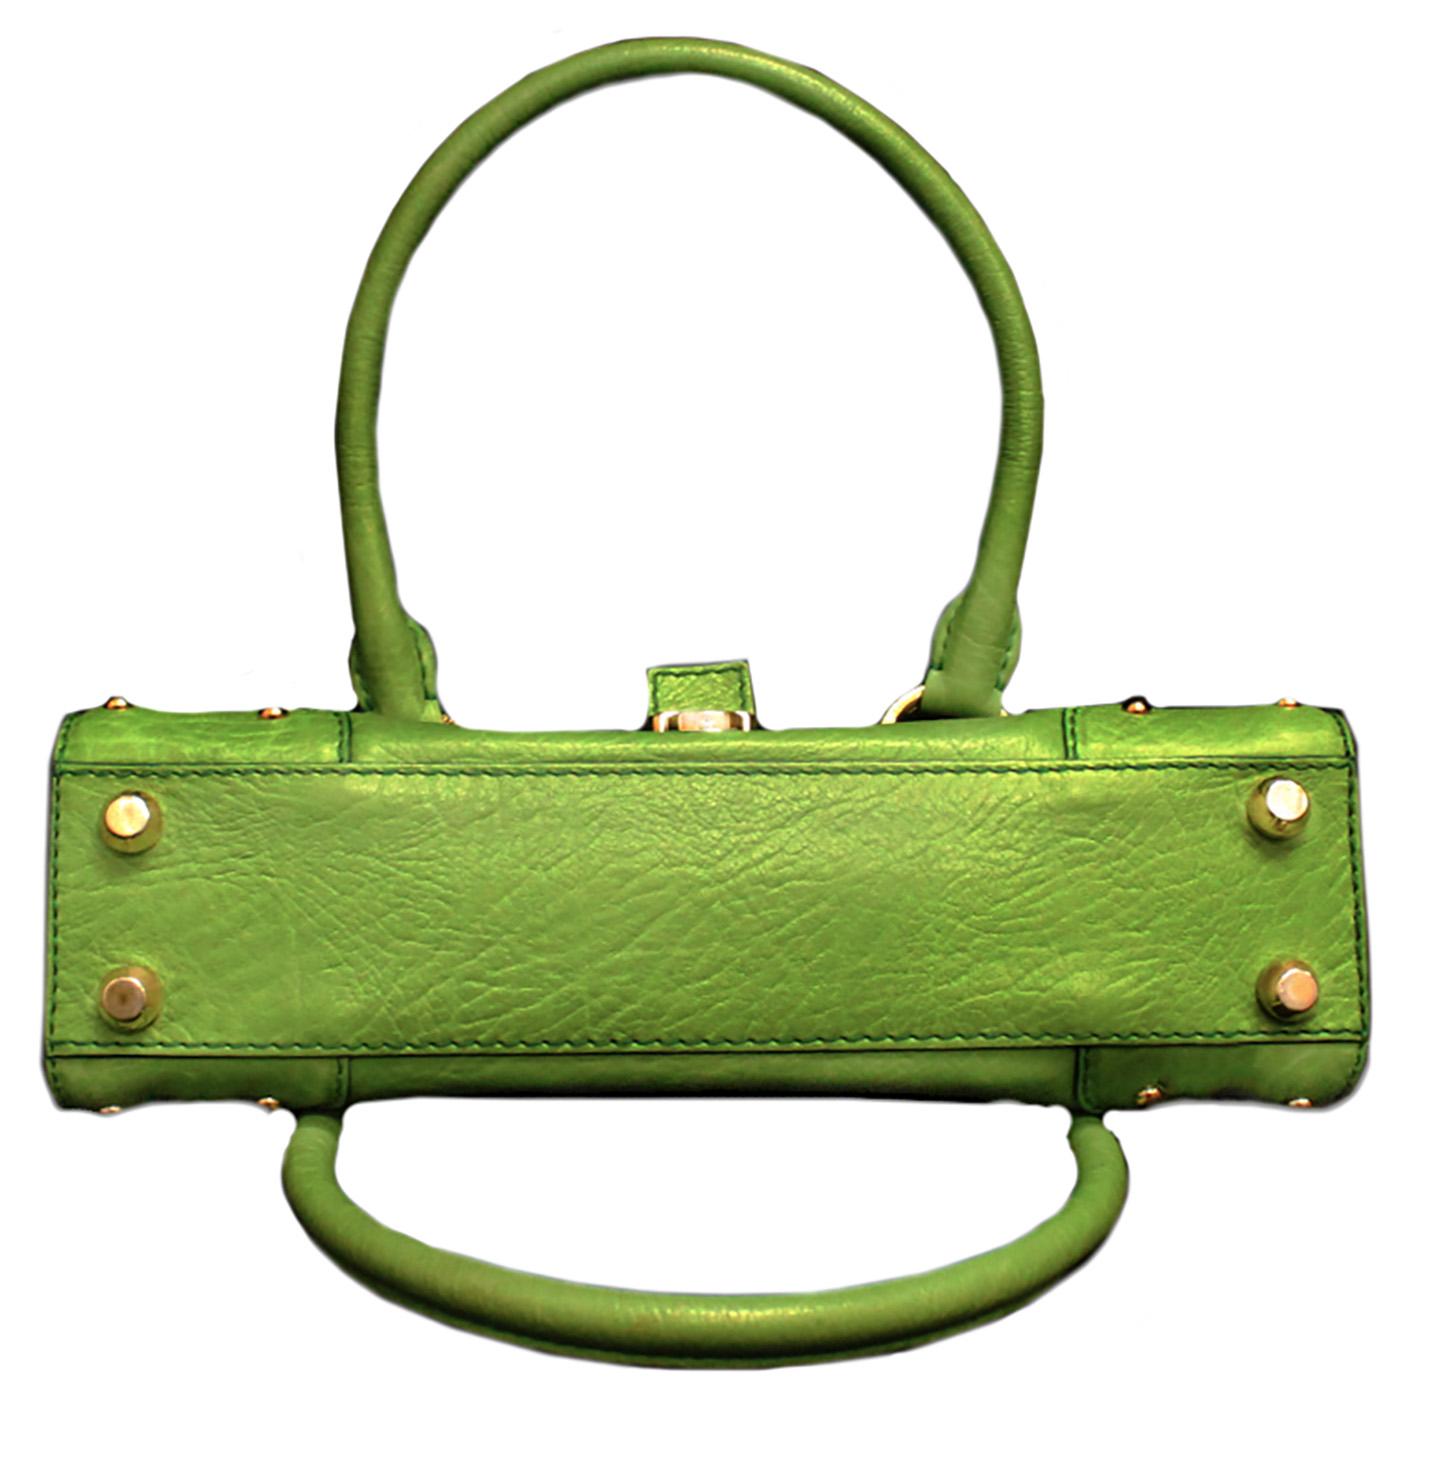 Dolce & Gabbana Green Grain Leather Top Handle Bag W/ Gold Tone Hardware 1